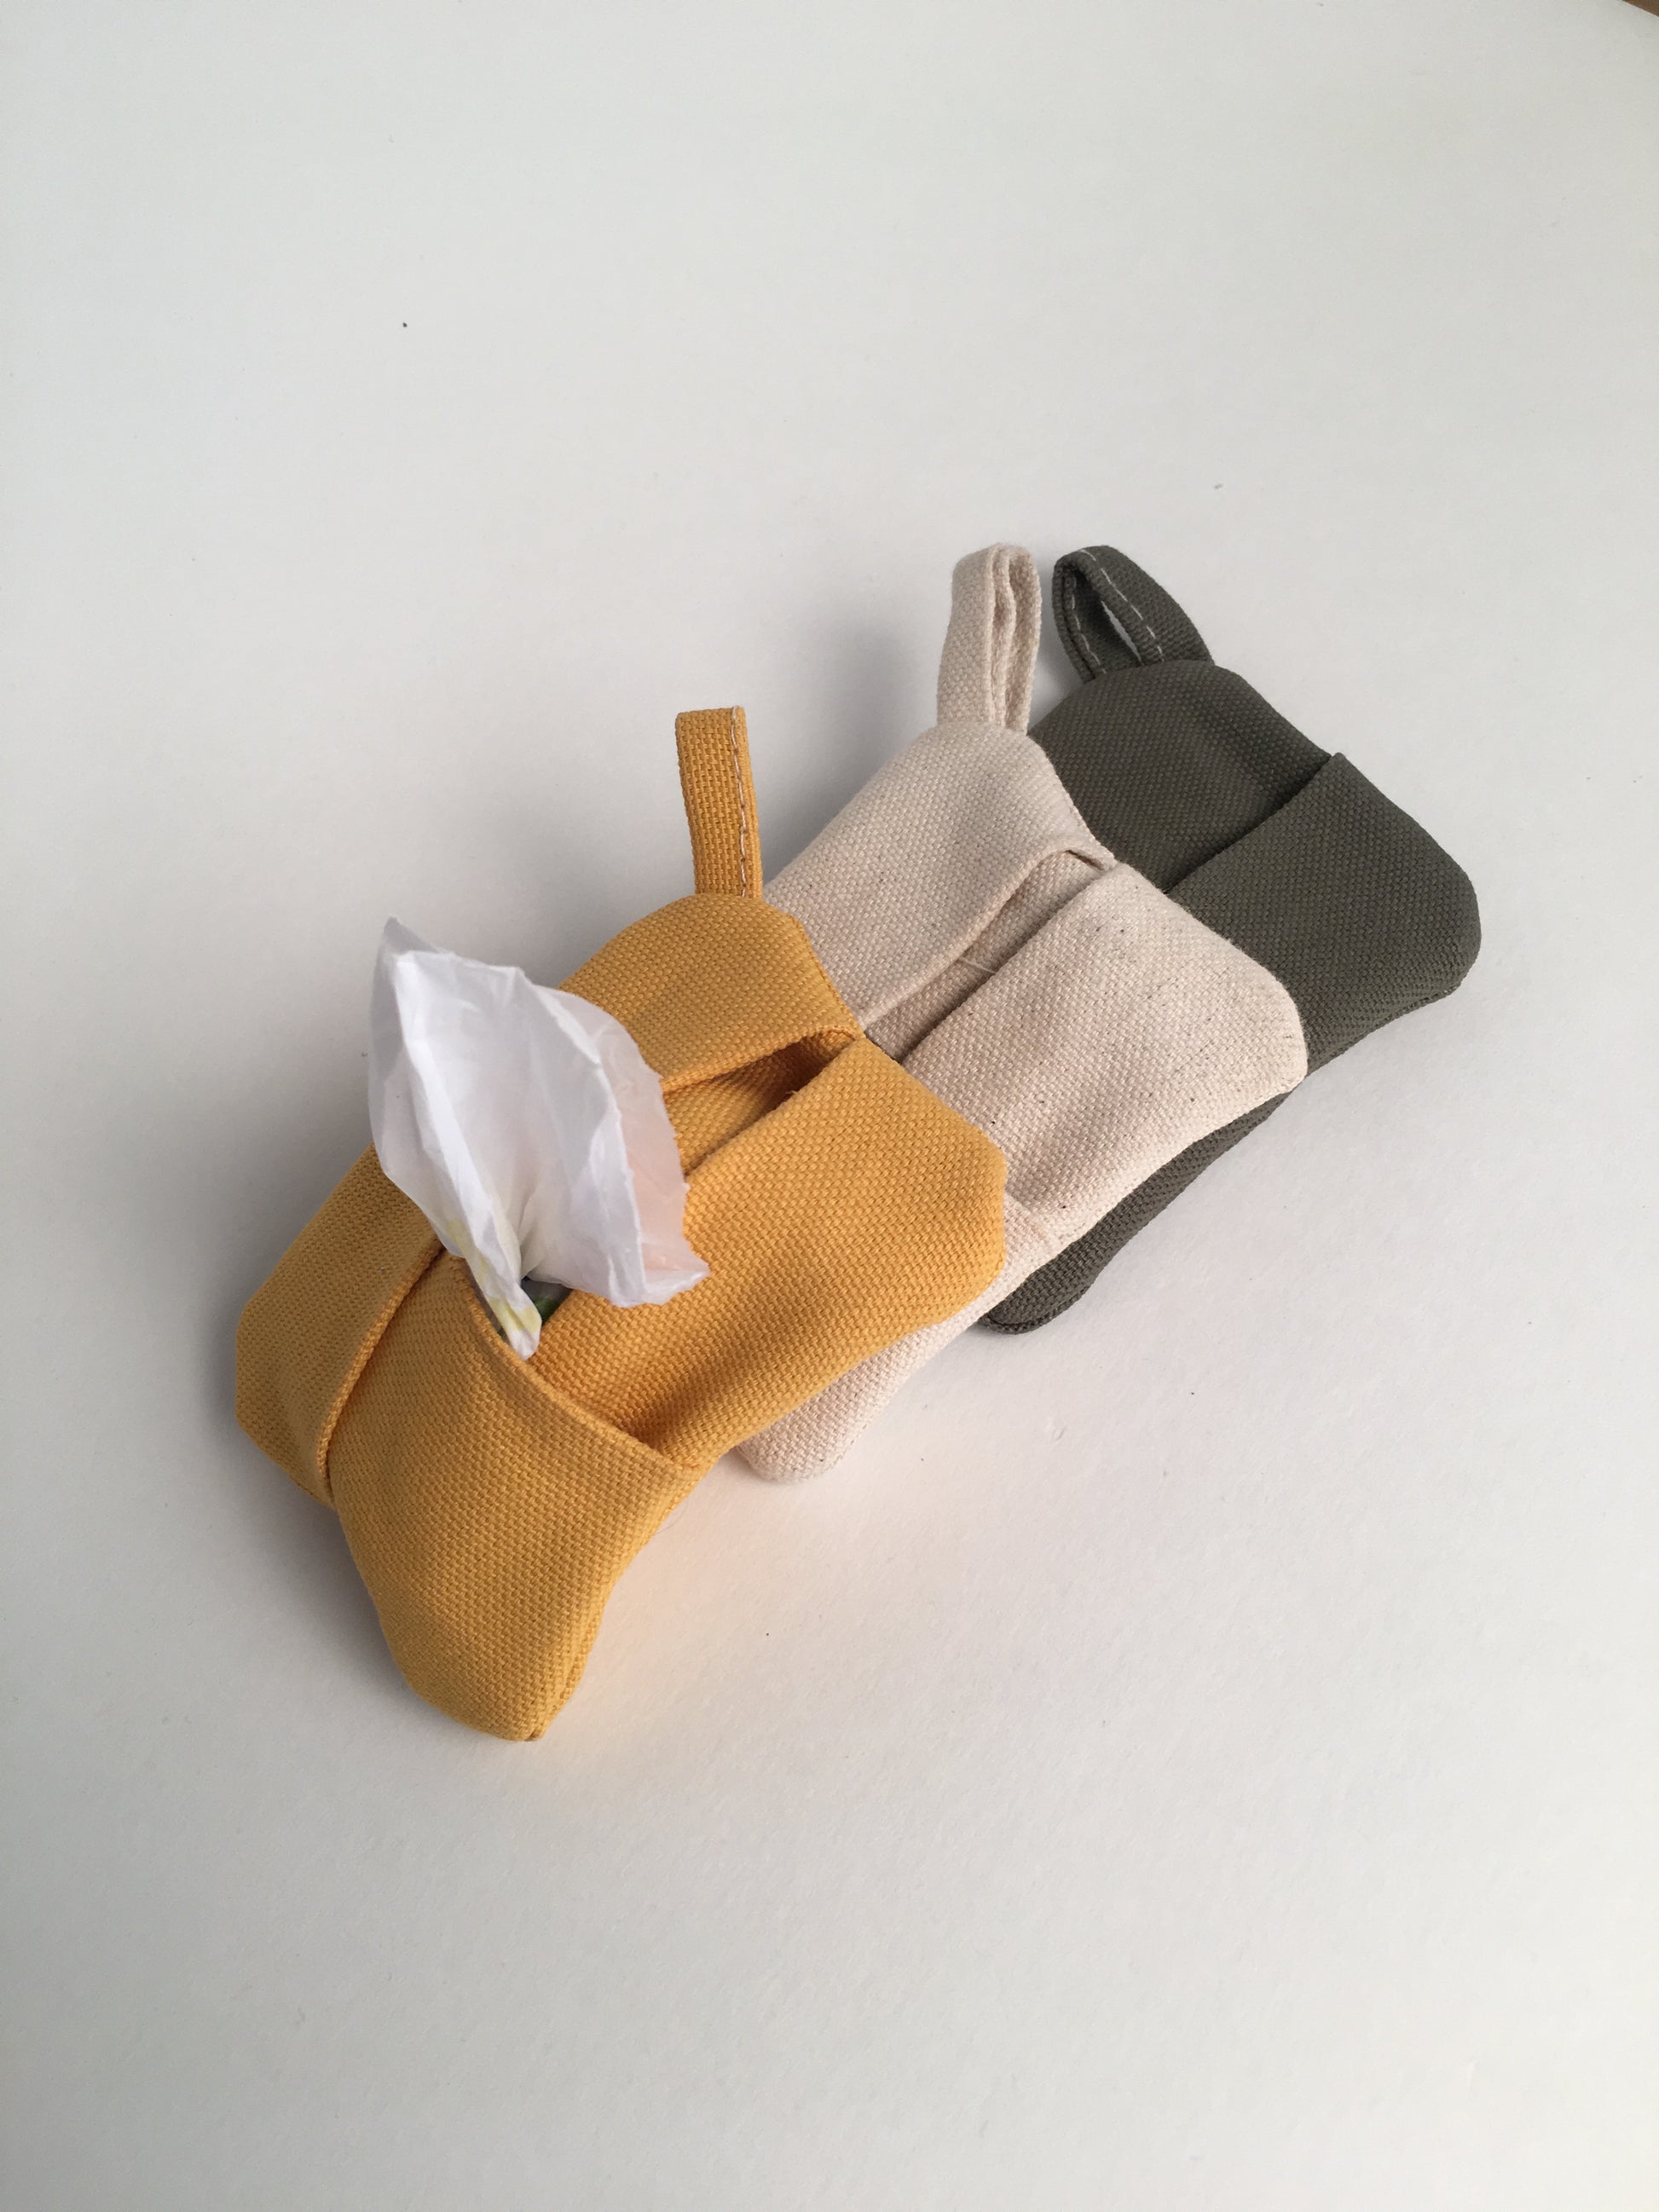 Doggy Bag Holder - Easy Sewing Pattern & Tutorial - la'rae handmade